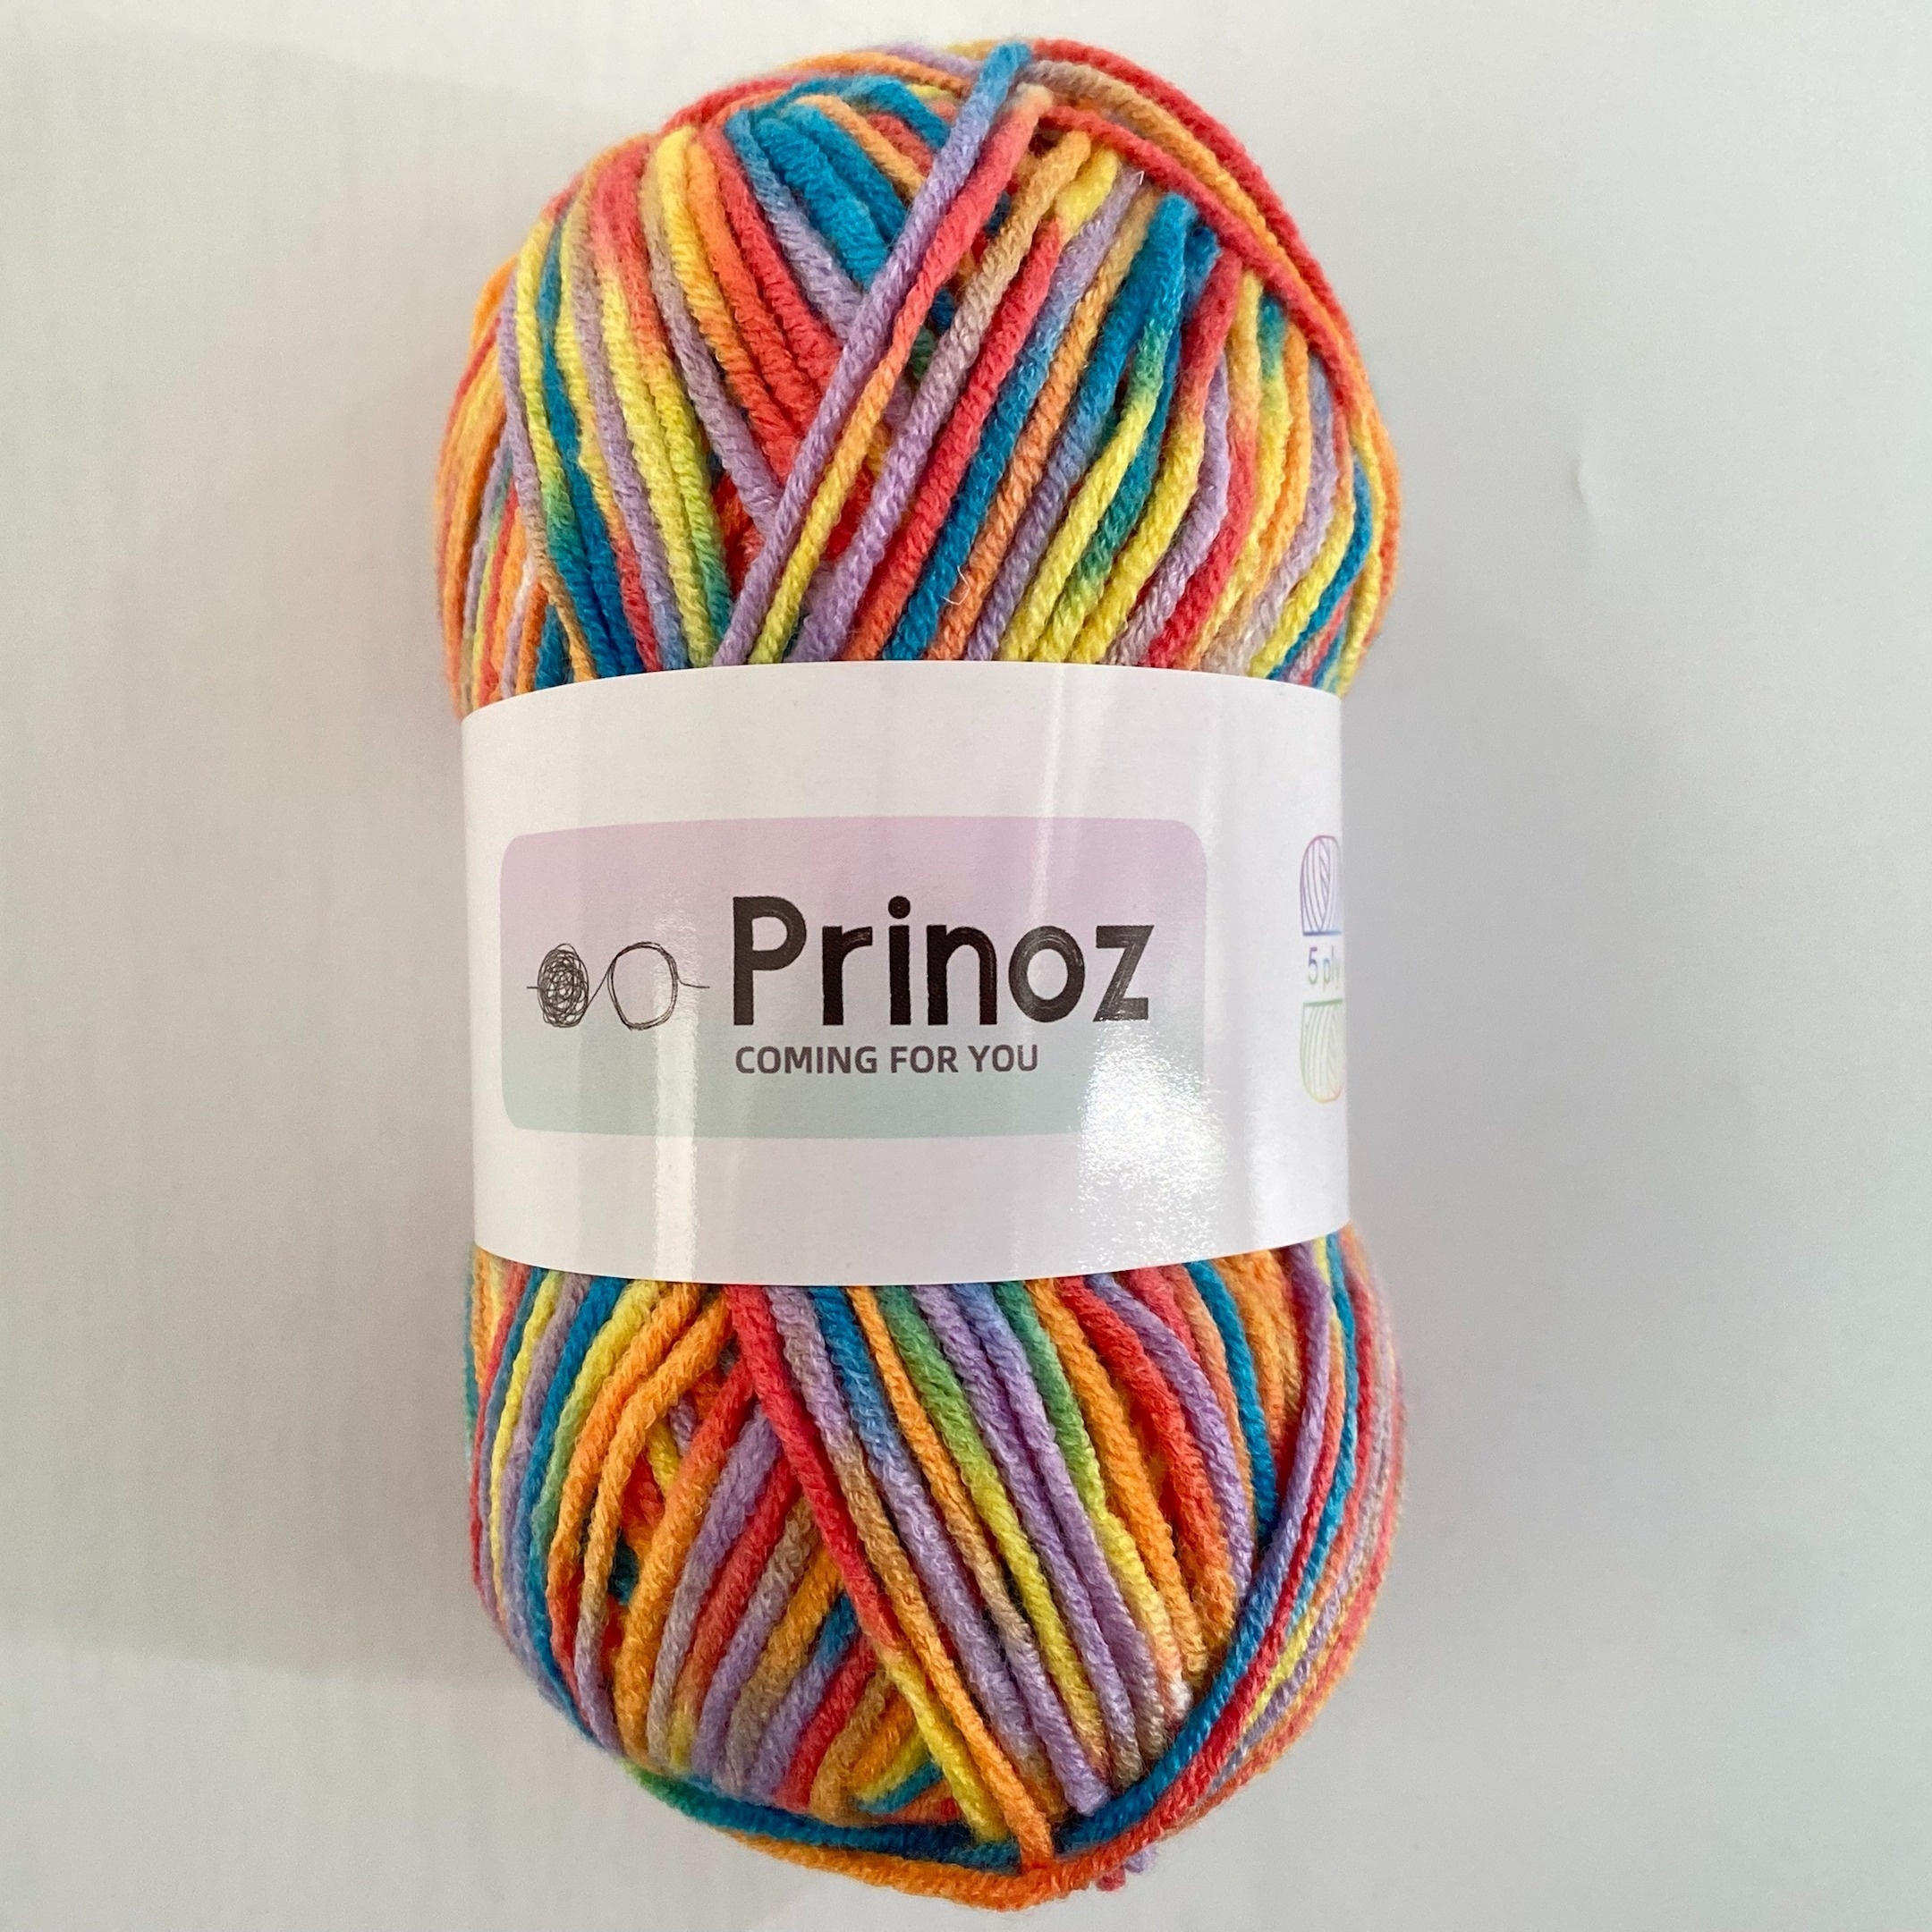 Yarn Knitting Crochet Cotton Hand Thread Material Gradient Rainbow Line Skeins Acrylic Supplies Me Near Beginners, Size: 13300.00x0.02x0.02cm